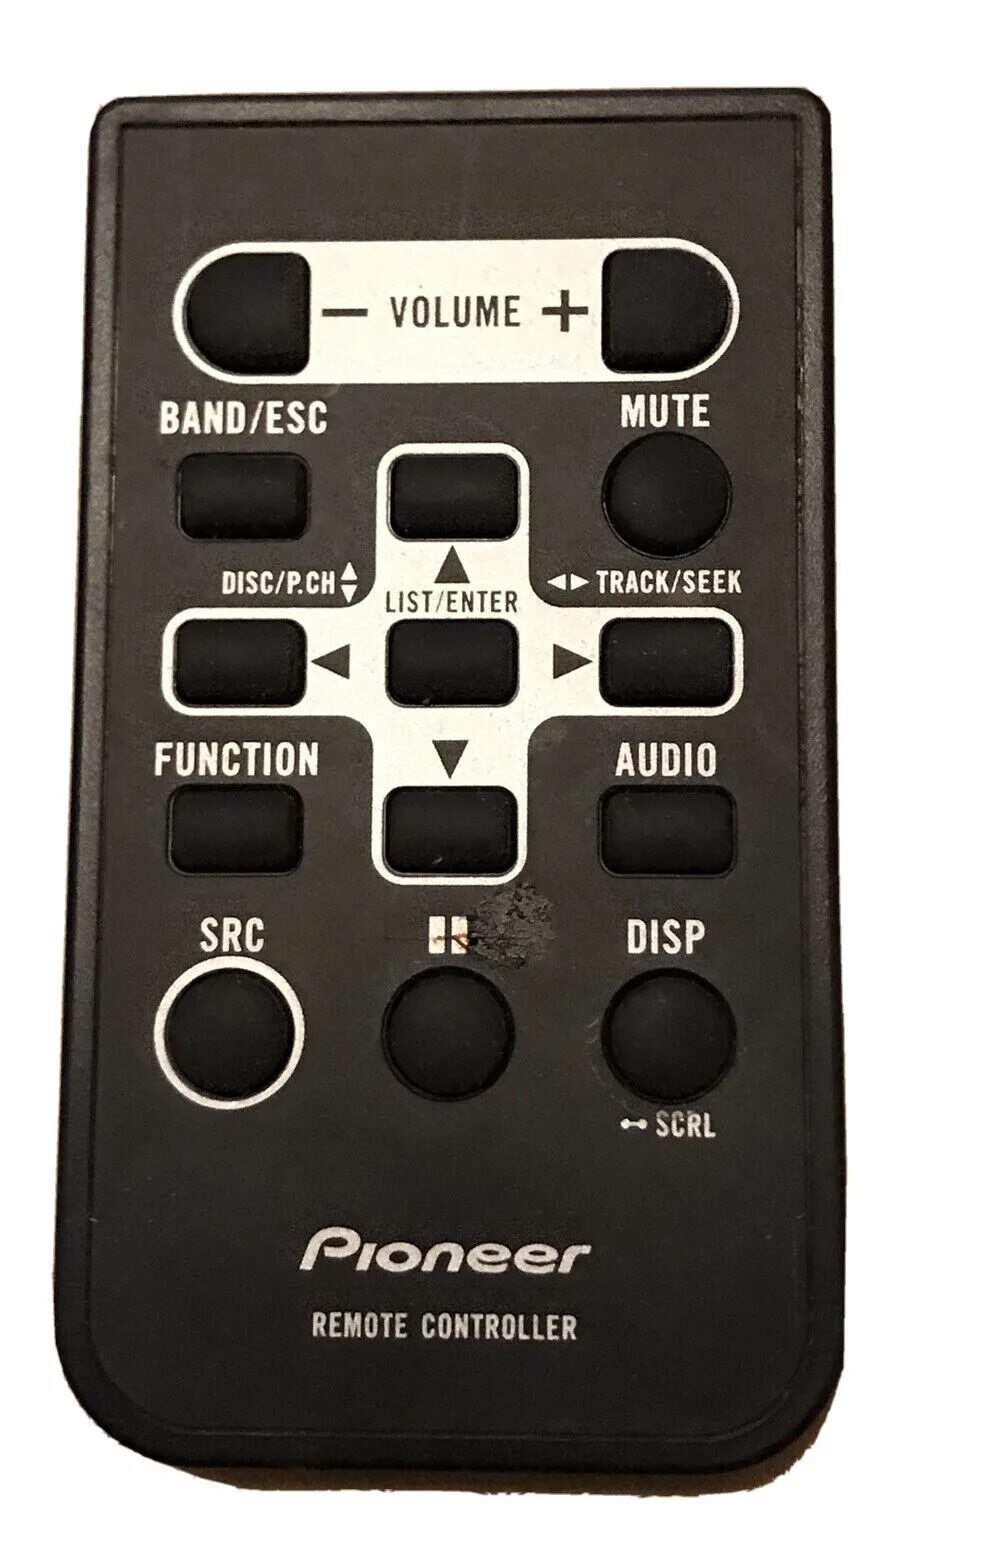 Пульт Pioneer Remote Controller. Pioneer Remote Controller cxe4625. Пульт Pioneer cu-a019. Пульт Pioneer cu-vsx140. Купить пульт пионер